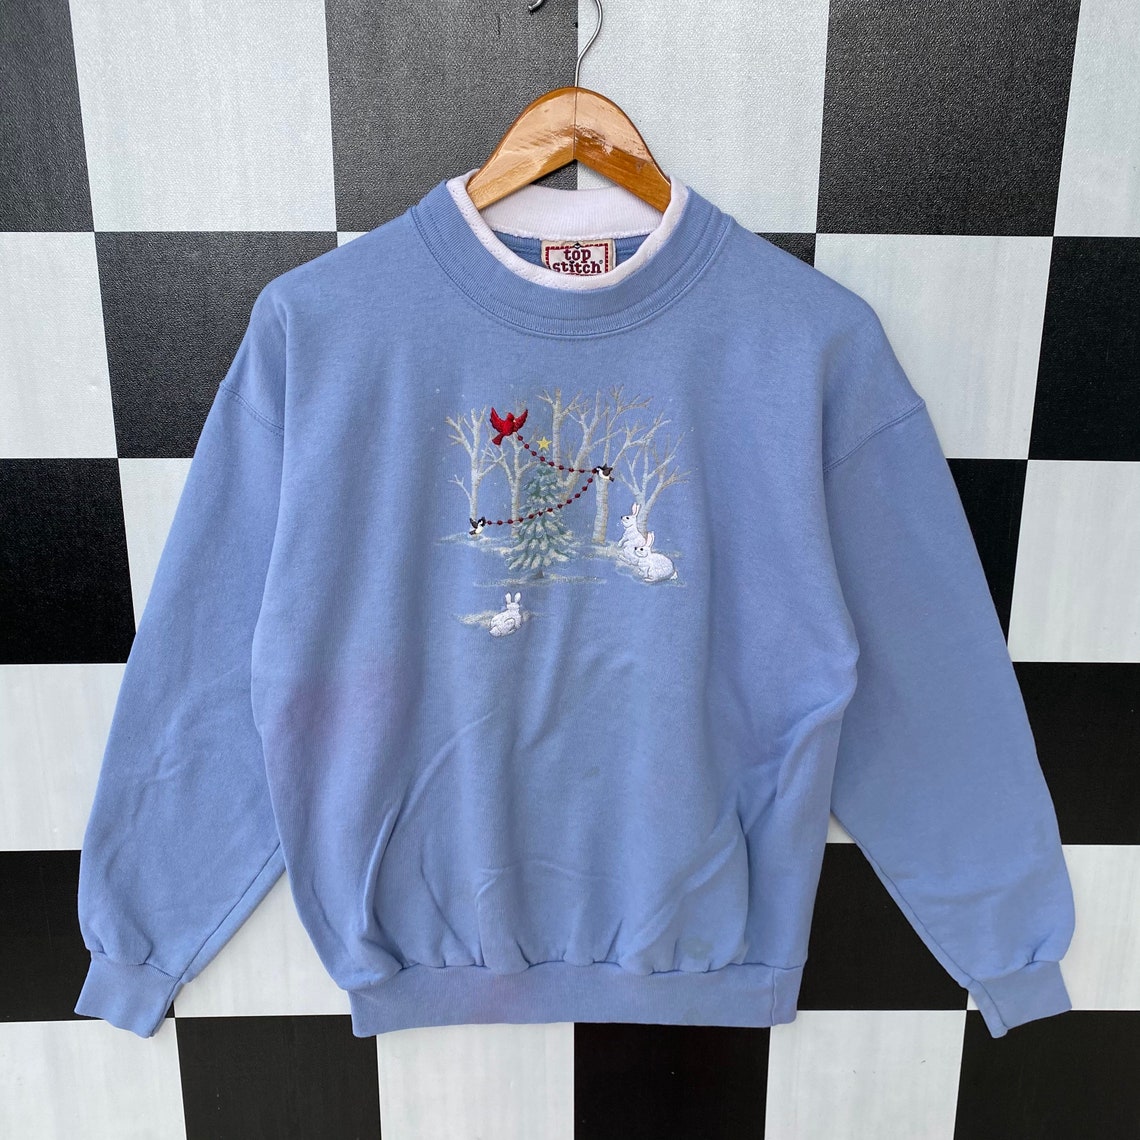 Vintage 90s Morning Sun Sweatshirt Jumper Top Stitch By | Etsy